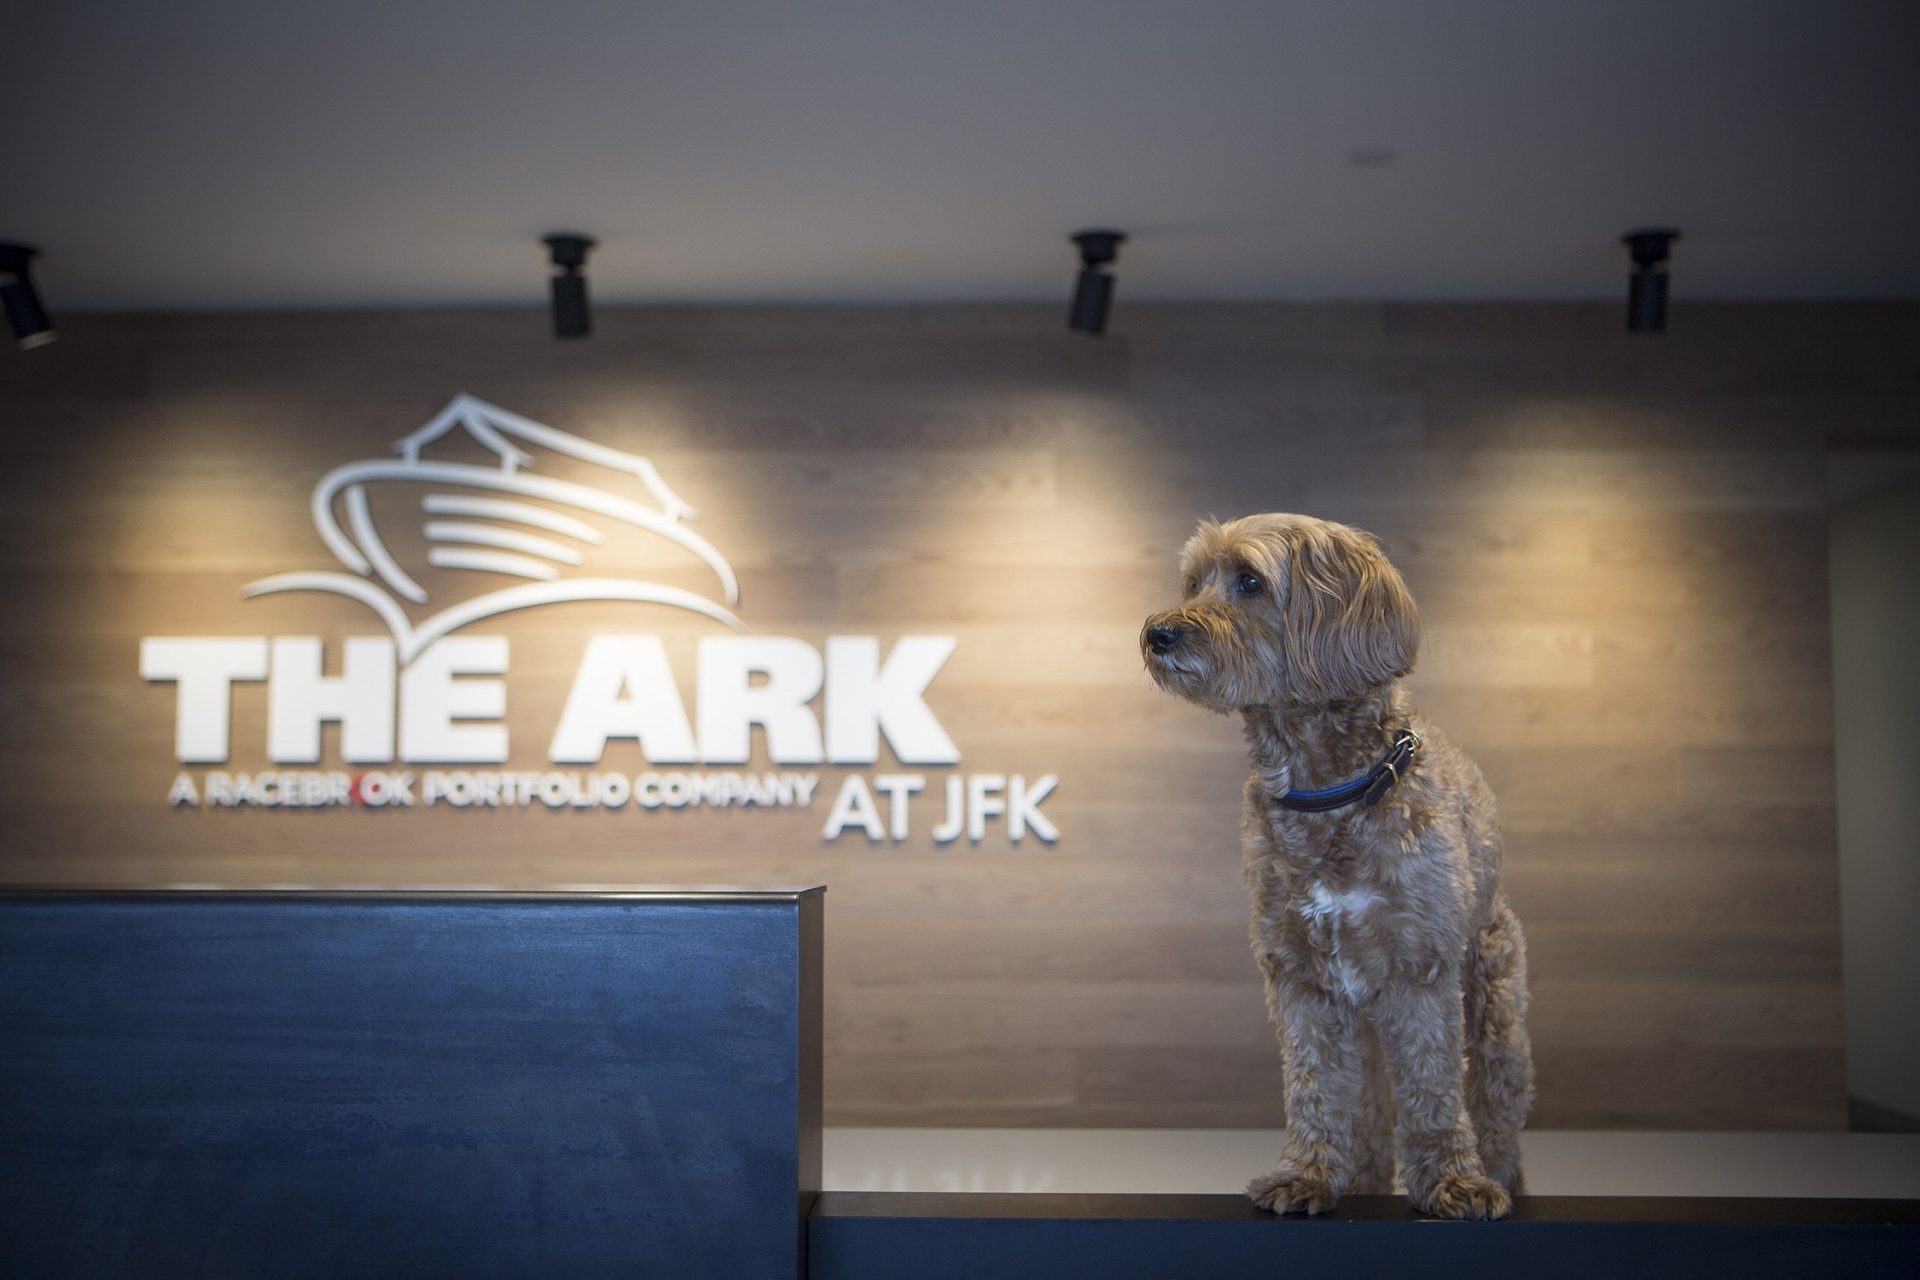 Foto donde aparece un perro posa frente al logo de la empresa "The Ark at JFK".EFE/Cornell University